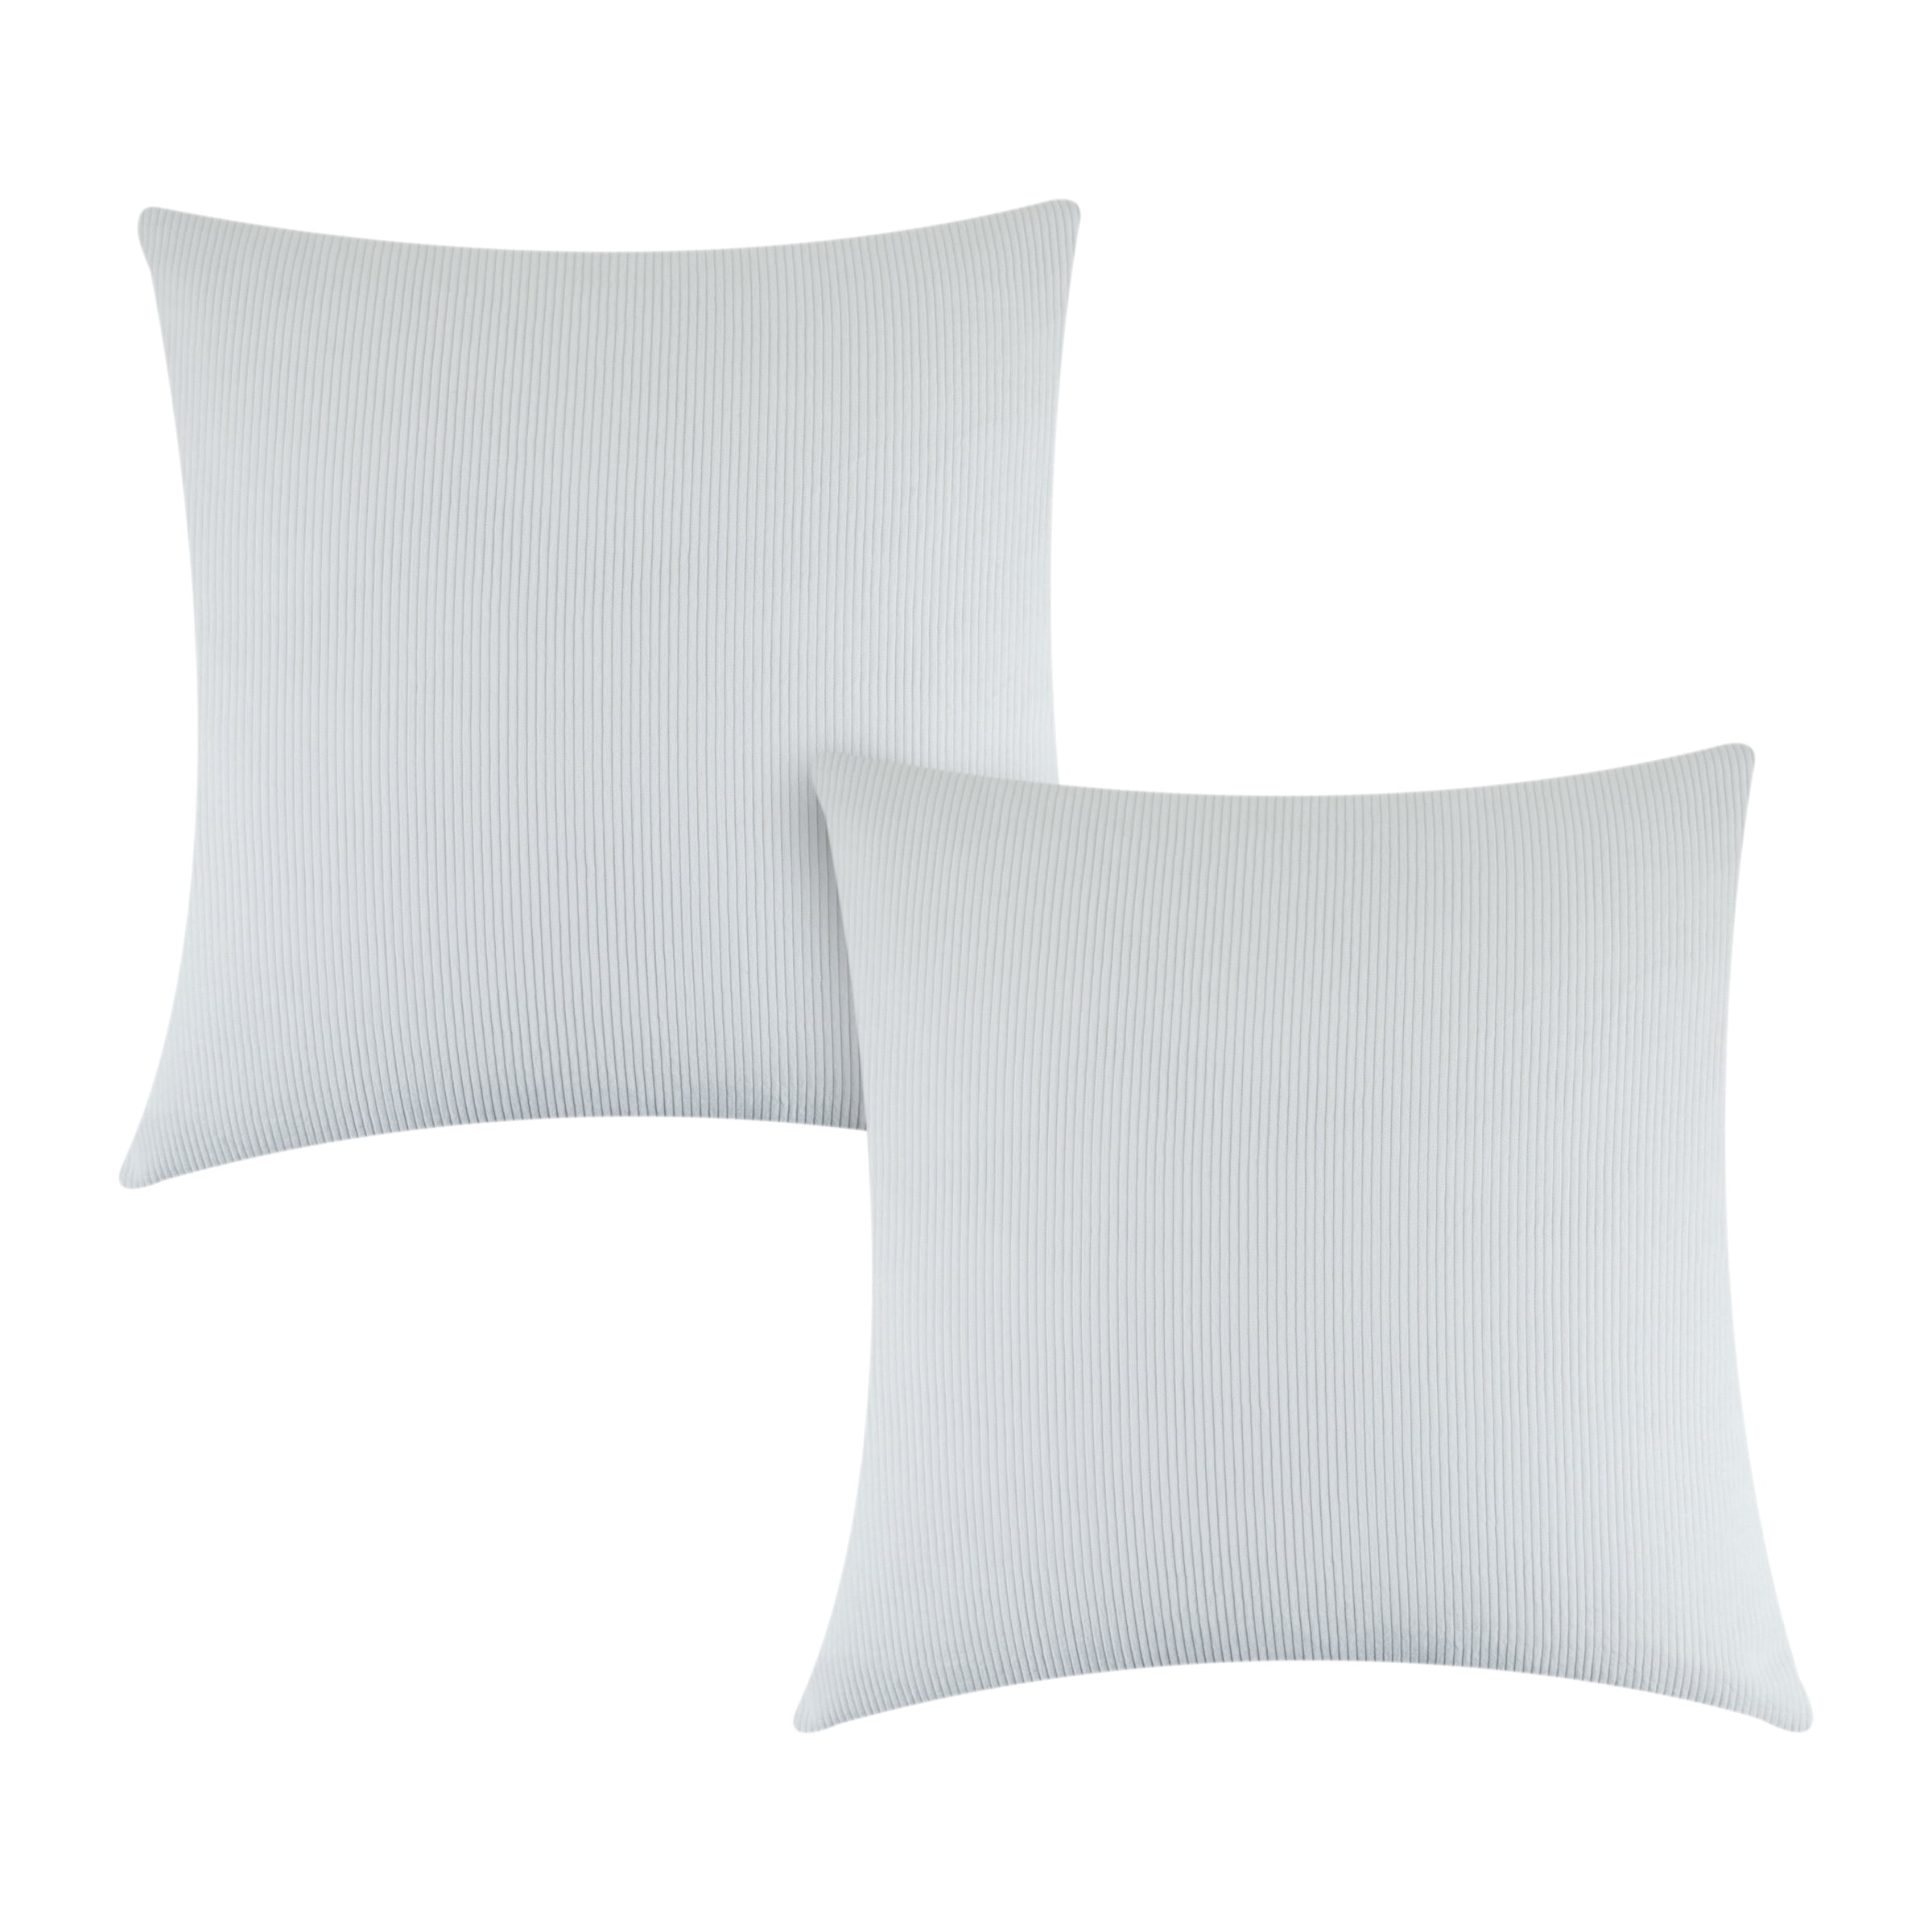 Brookline White Soft Cotton 20 x 26 Inch Standard Sham Pillow Cover Standard Sham